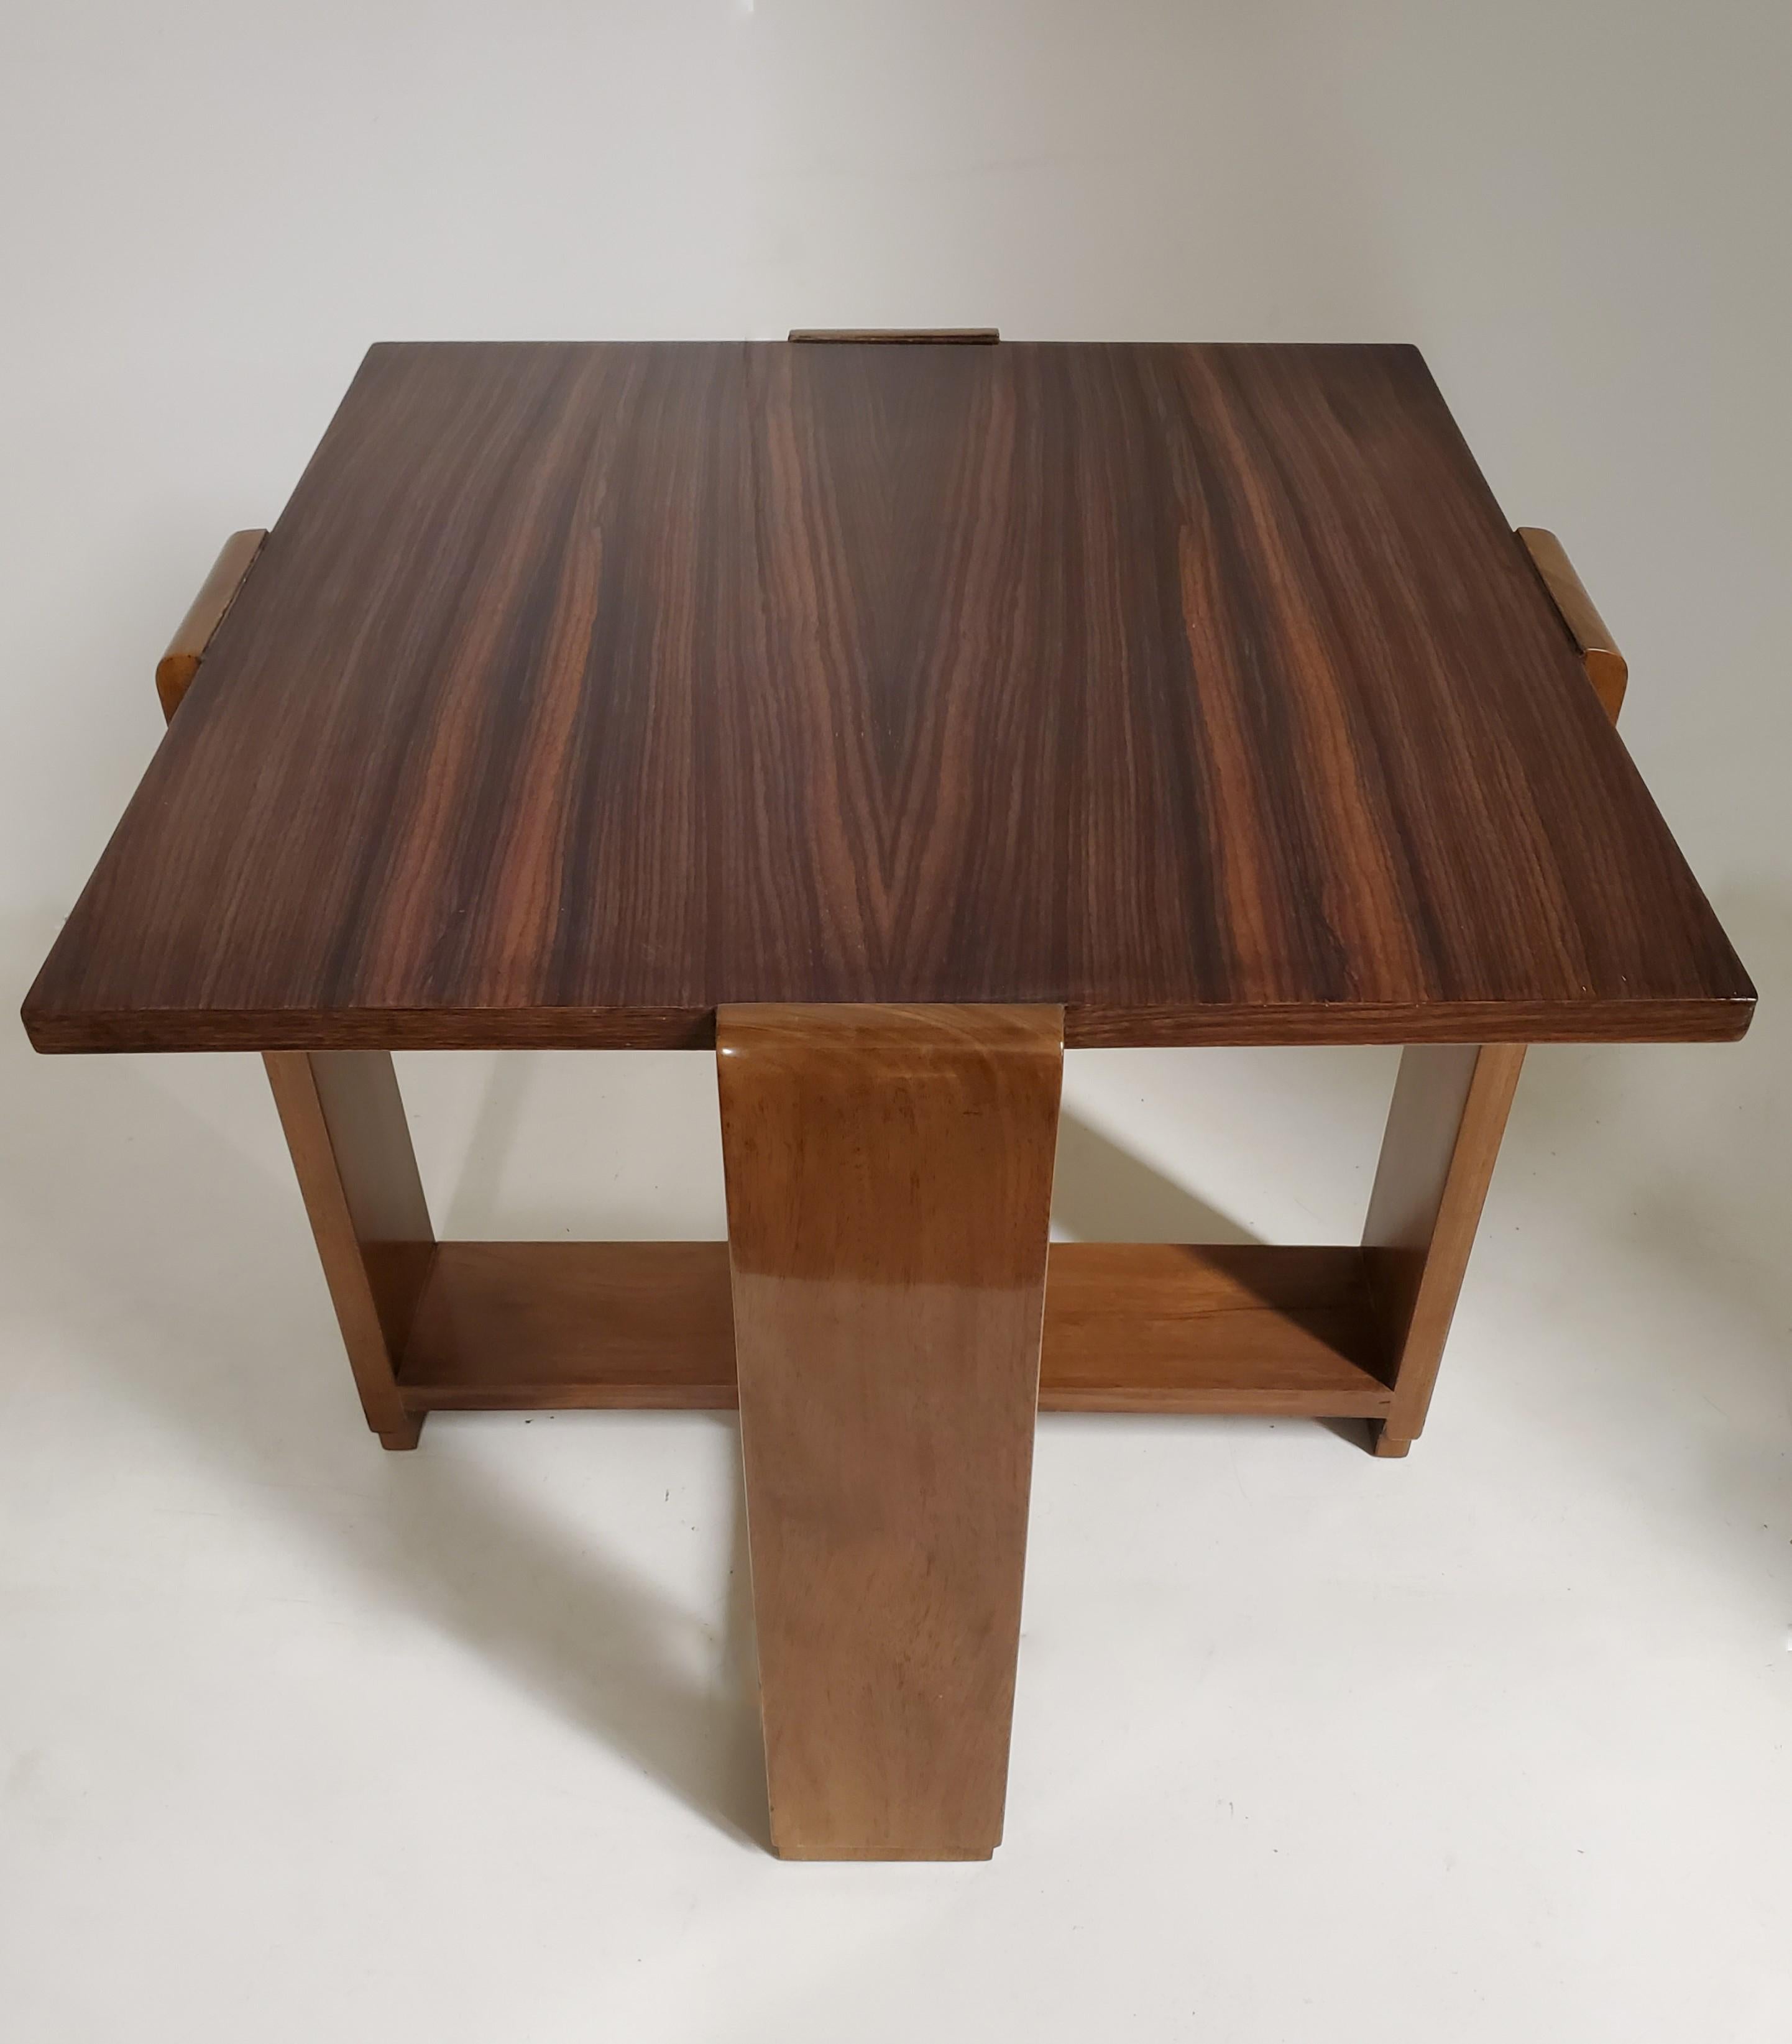 Original French Art Deco Macassar Ebony Square Table, Michel Roux-Spitz For Sale 14